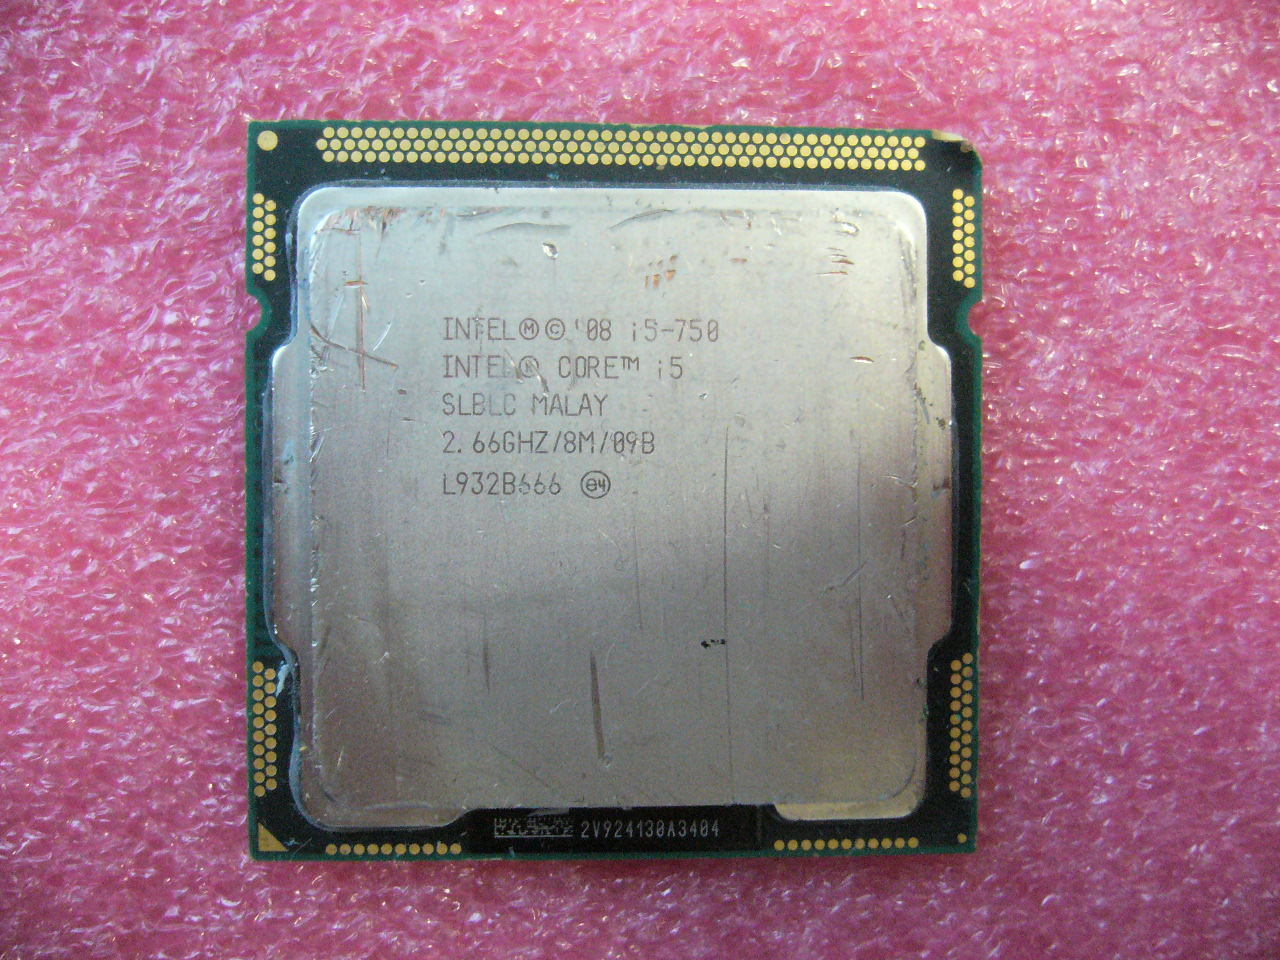 QTY 1x Intel CPU i5-750 Quad-Cores 2.66Ghz/8MB LGA1156 SLBLC - Click Image to Close